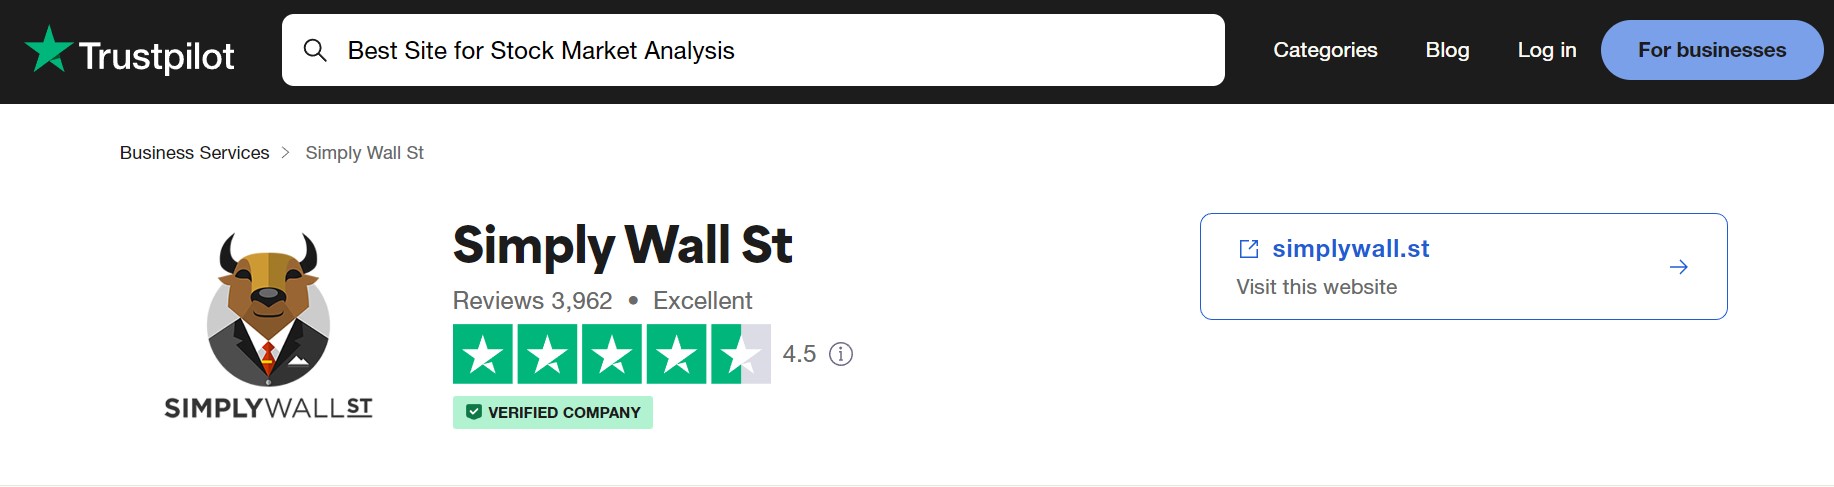 Simply Wall Street trustpilot_ stock market analysis tools